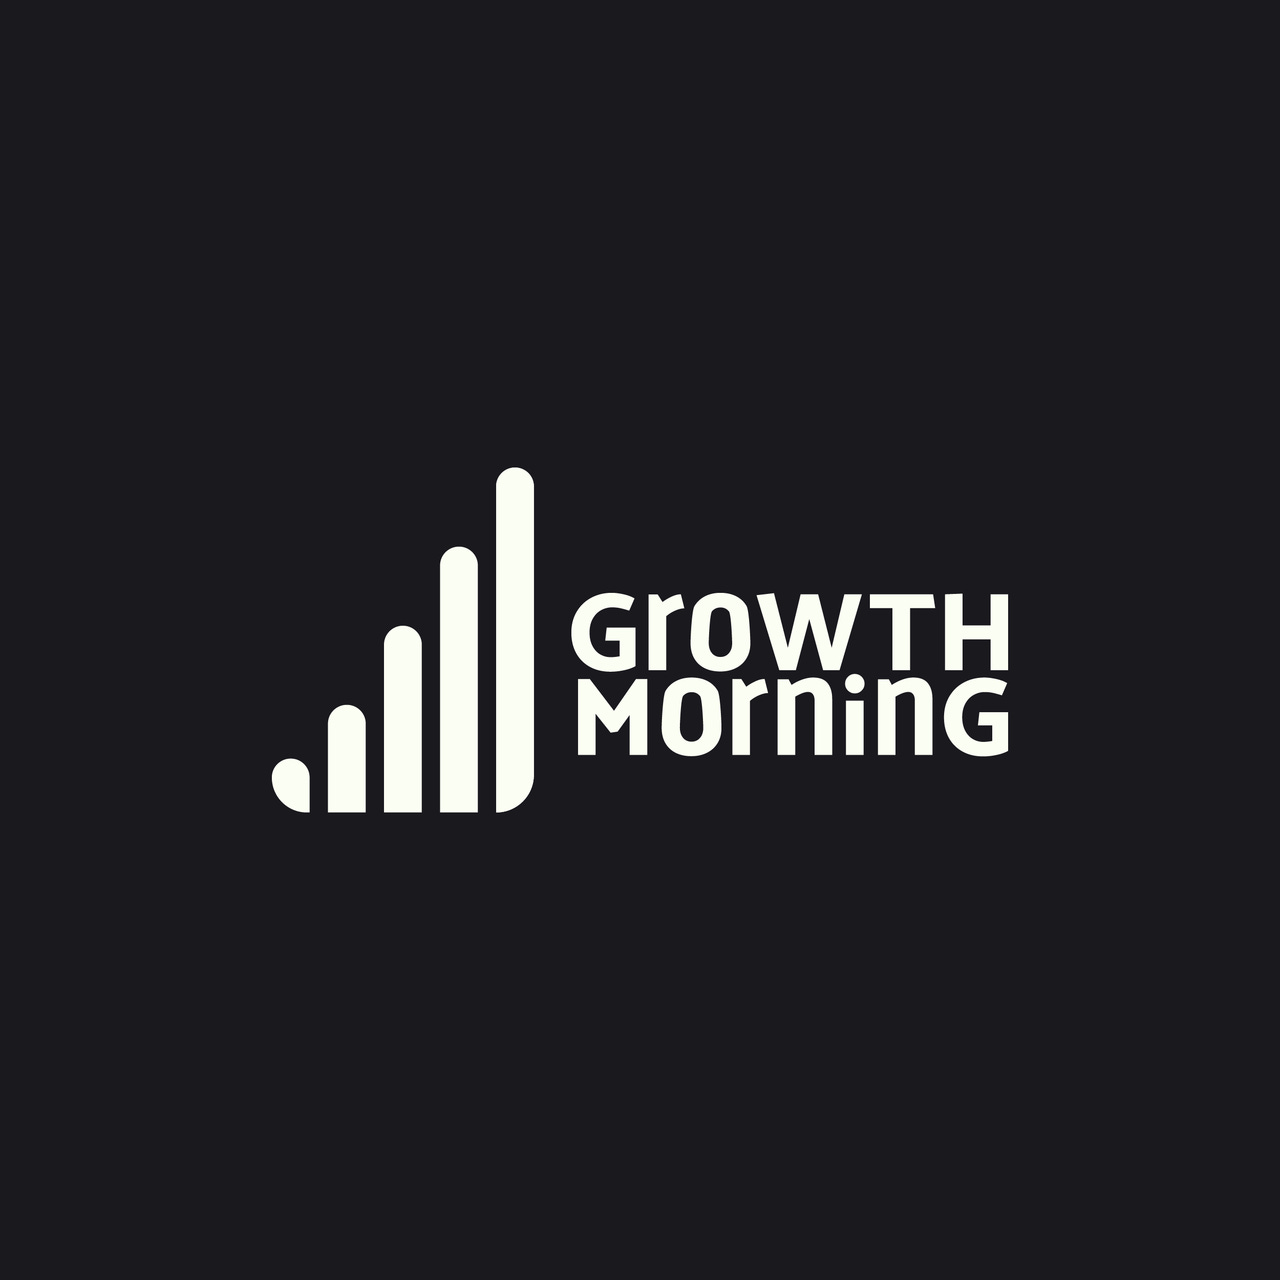 Growth Morning